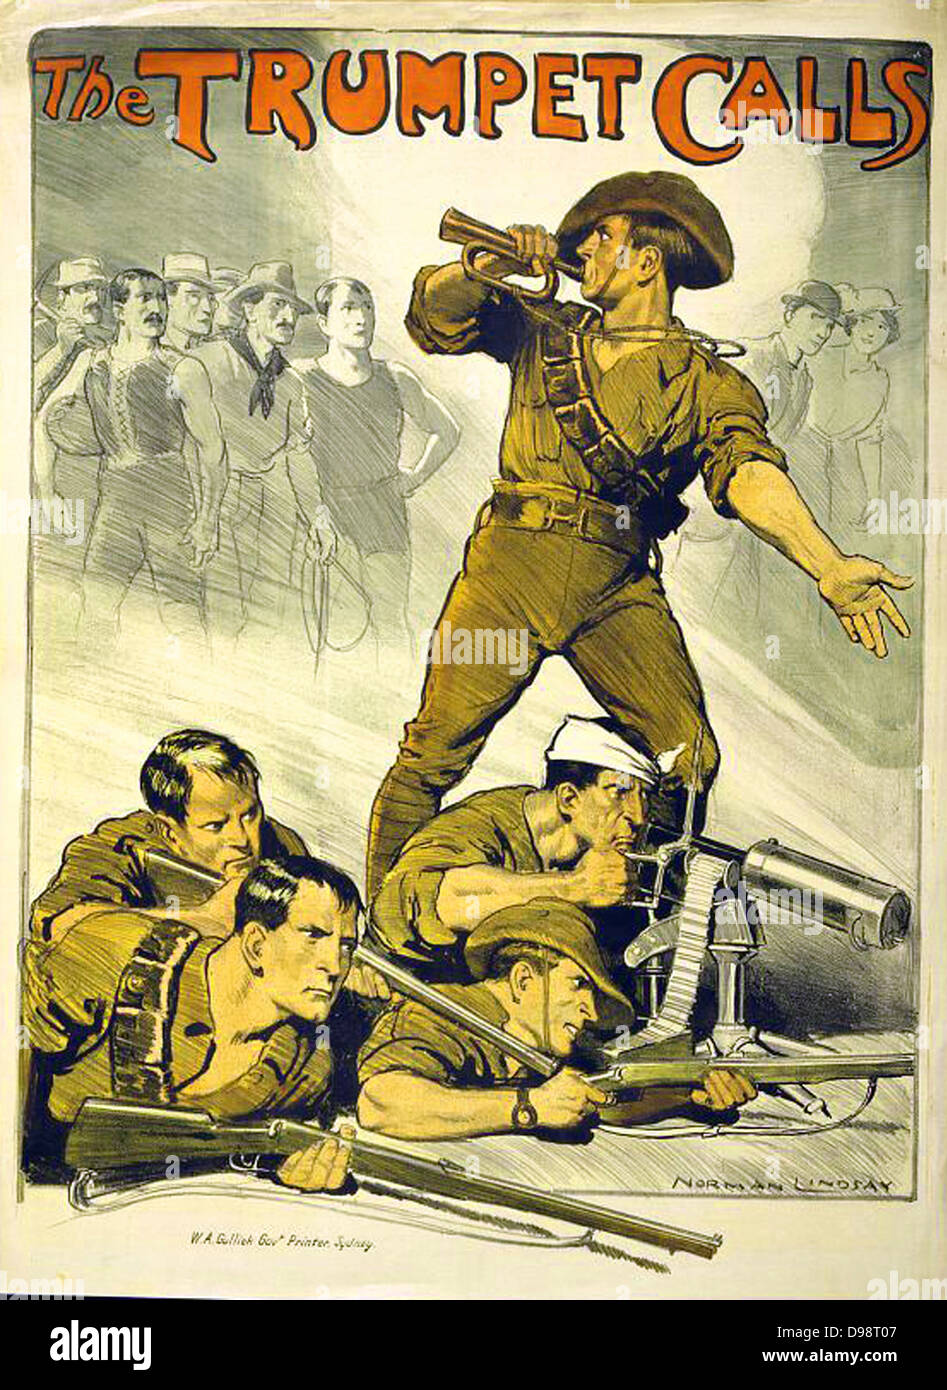 The Trumpet Calls: Australian World War I recruitment poster. Bugler calling Australian men to join their compatriots already fighting. Norman Lindsay (1879-1969) Australian artist. Machine Gun Rifle Stock Photo